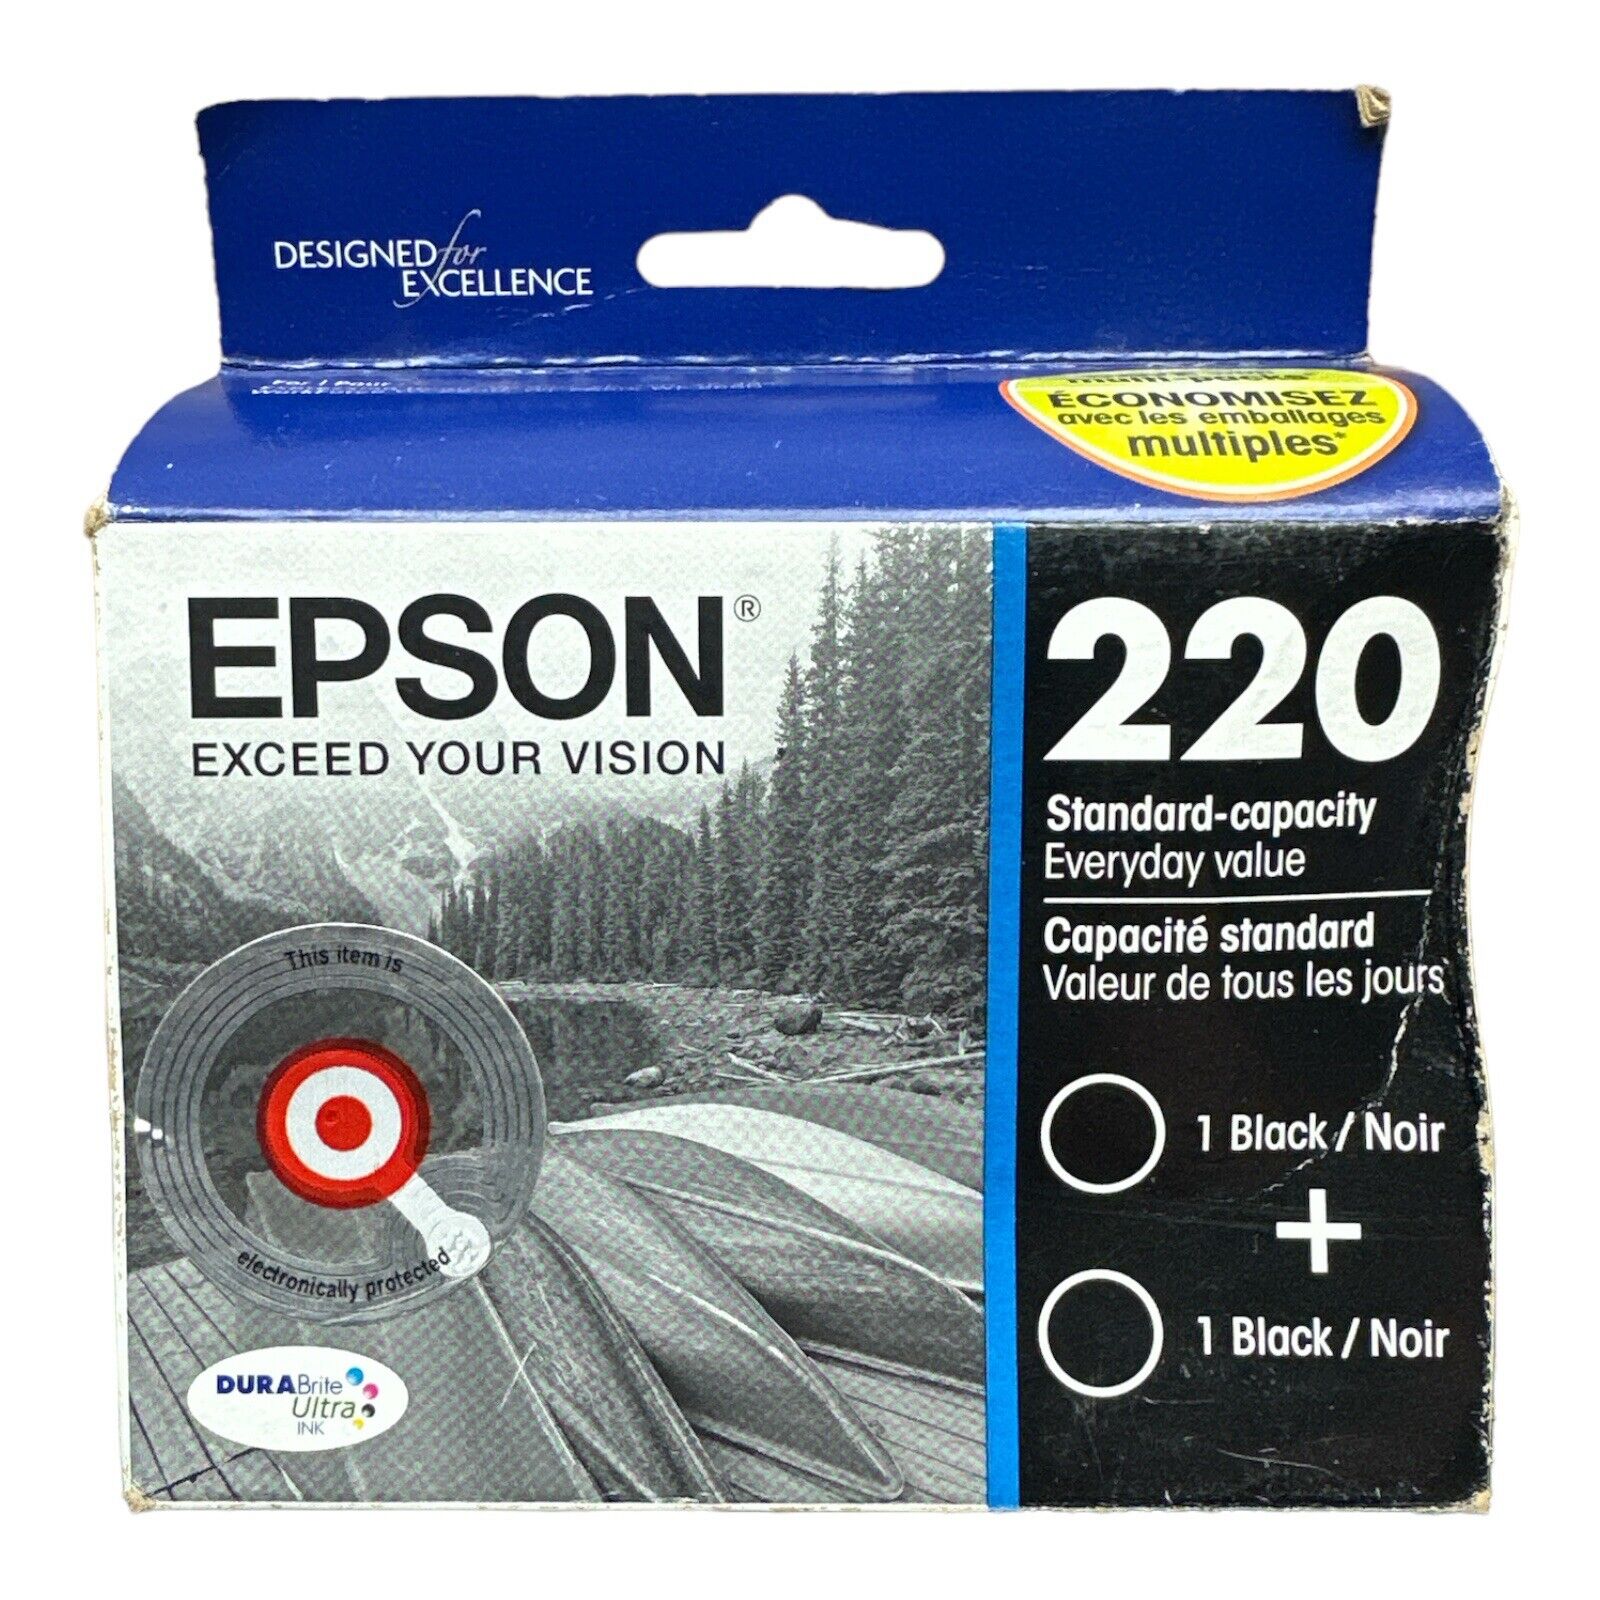 Genuine Epson 220 Black Ink Cartridges 2PK Standard Capacity Exp 06/2018 Sealed